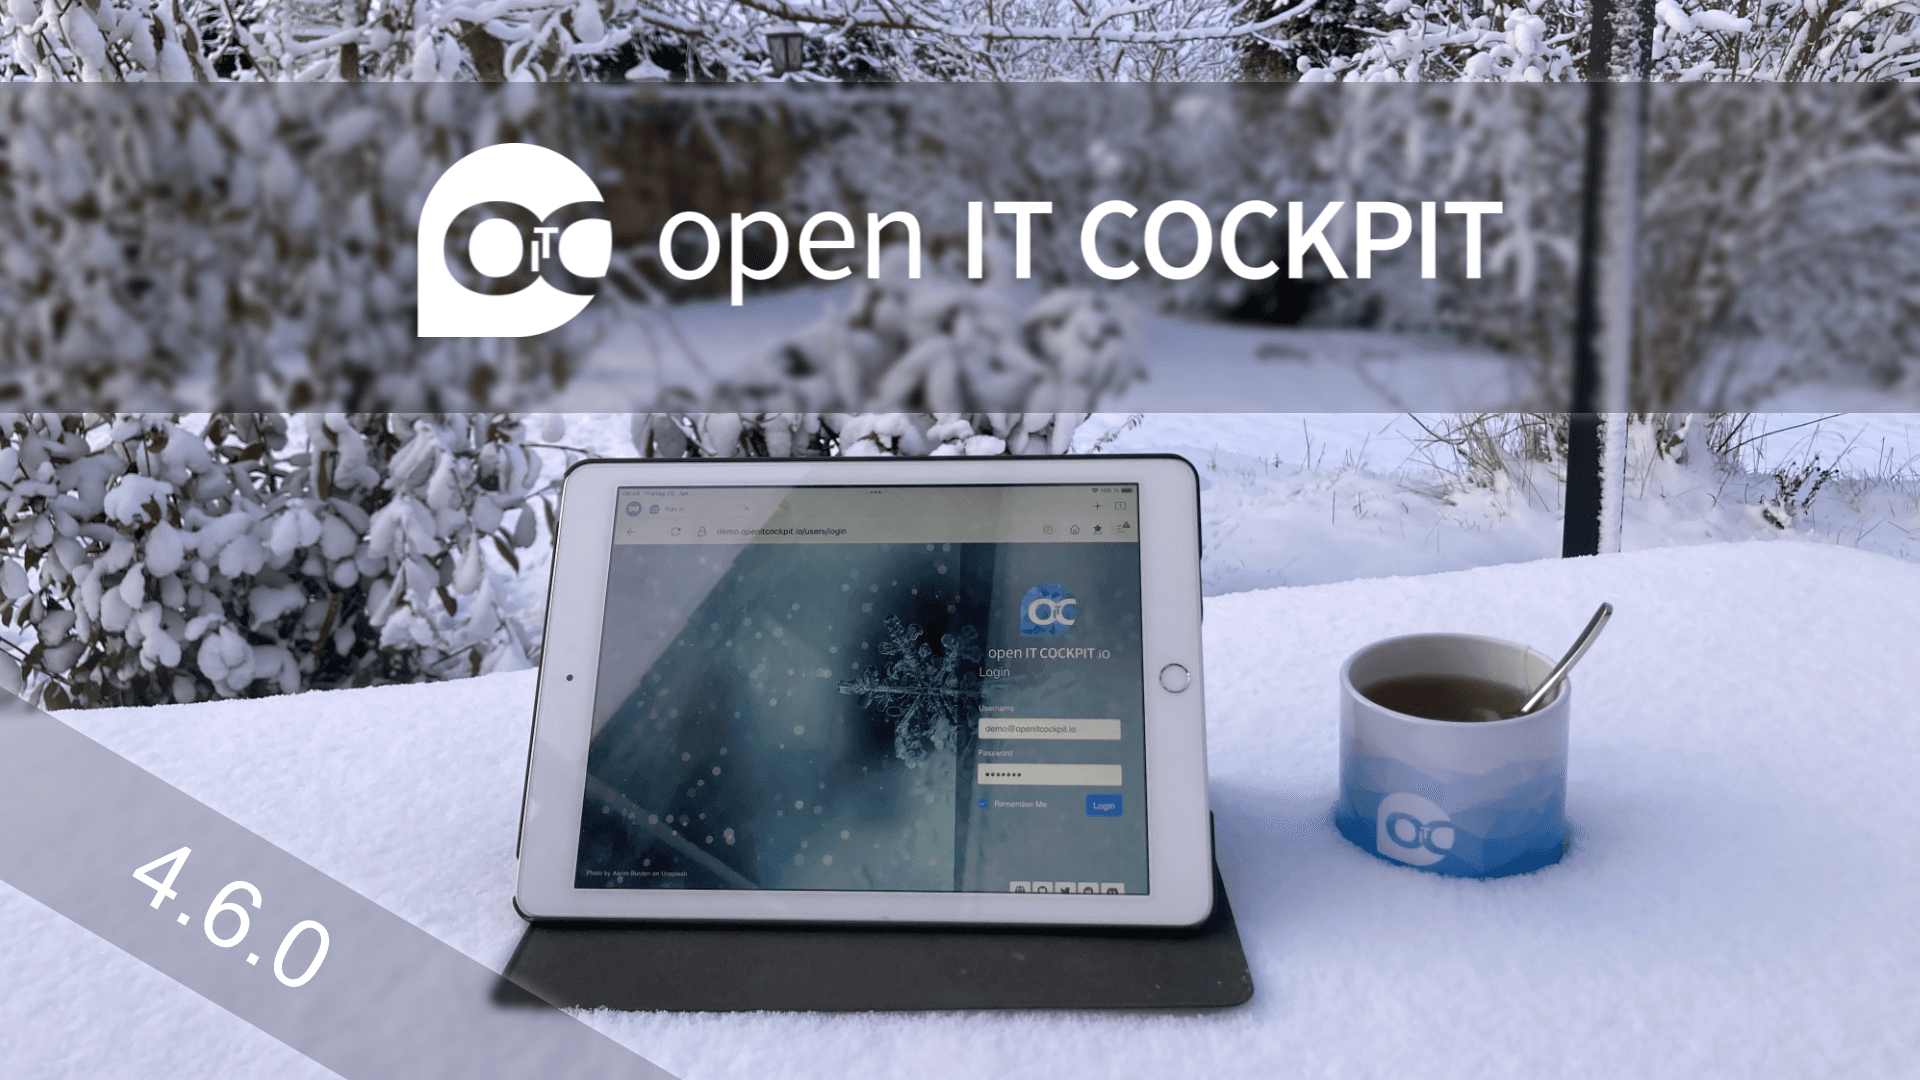 openITCOCKPIT 4.6.0 released